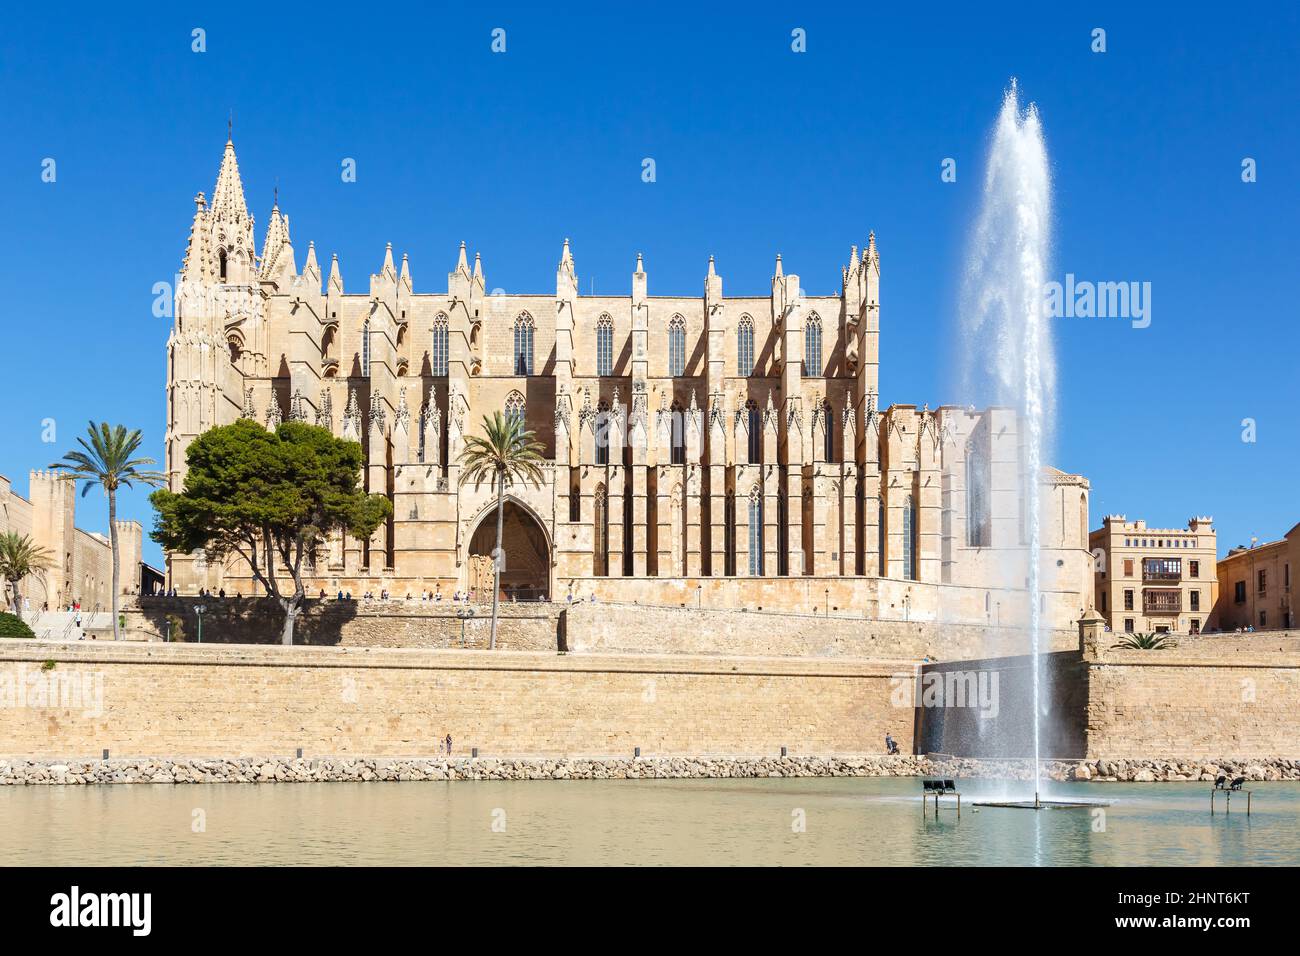 Kathedrale Catedral de Palma de Mallorca La Seu Kirche Architektur Reise Reiseurlaub Urlaub in Spanien Stockfoto